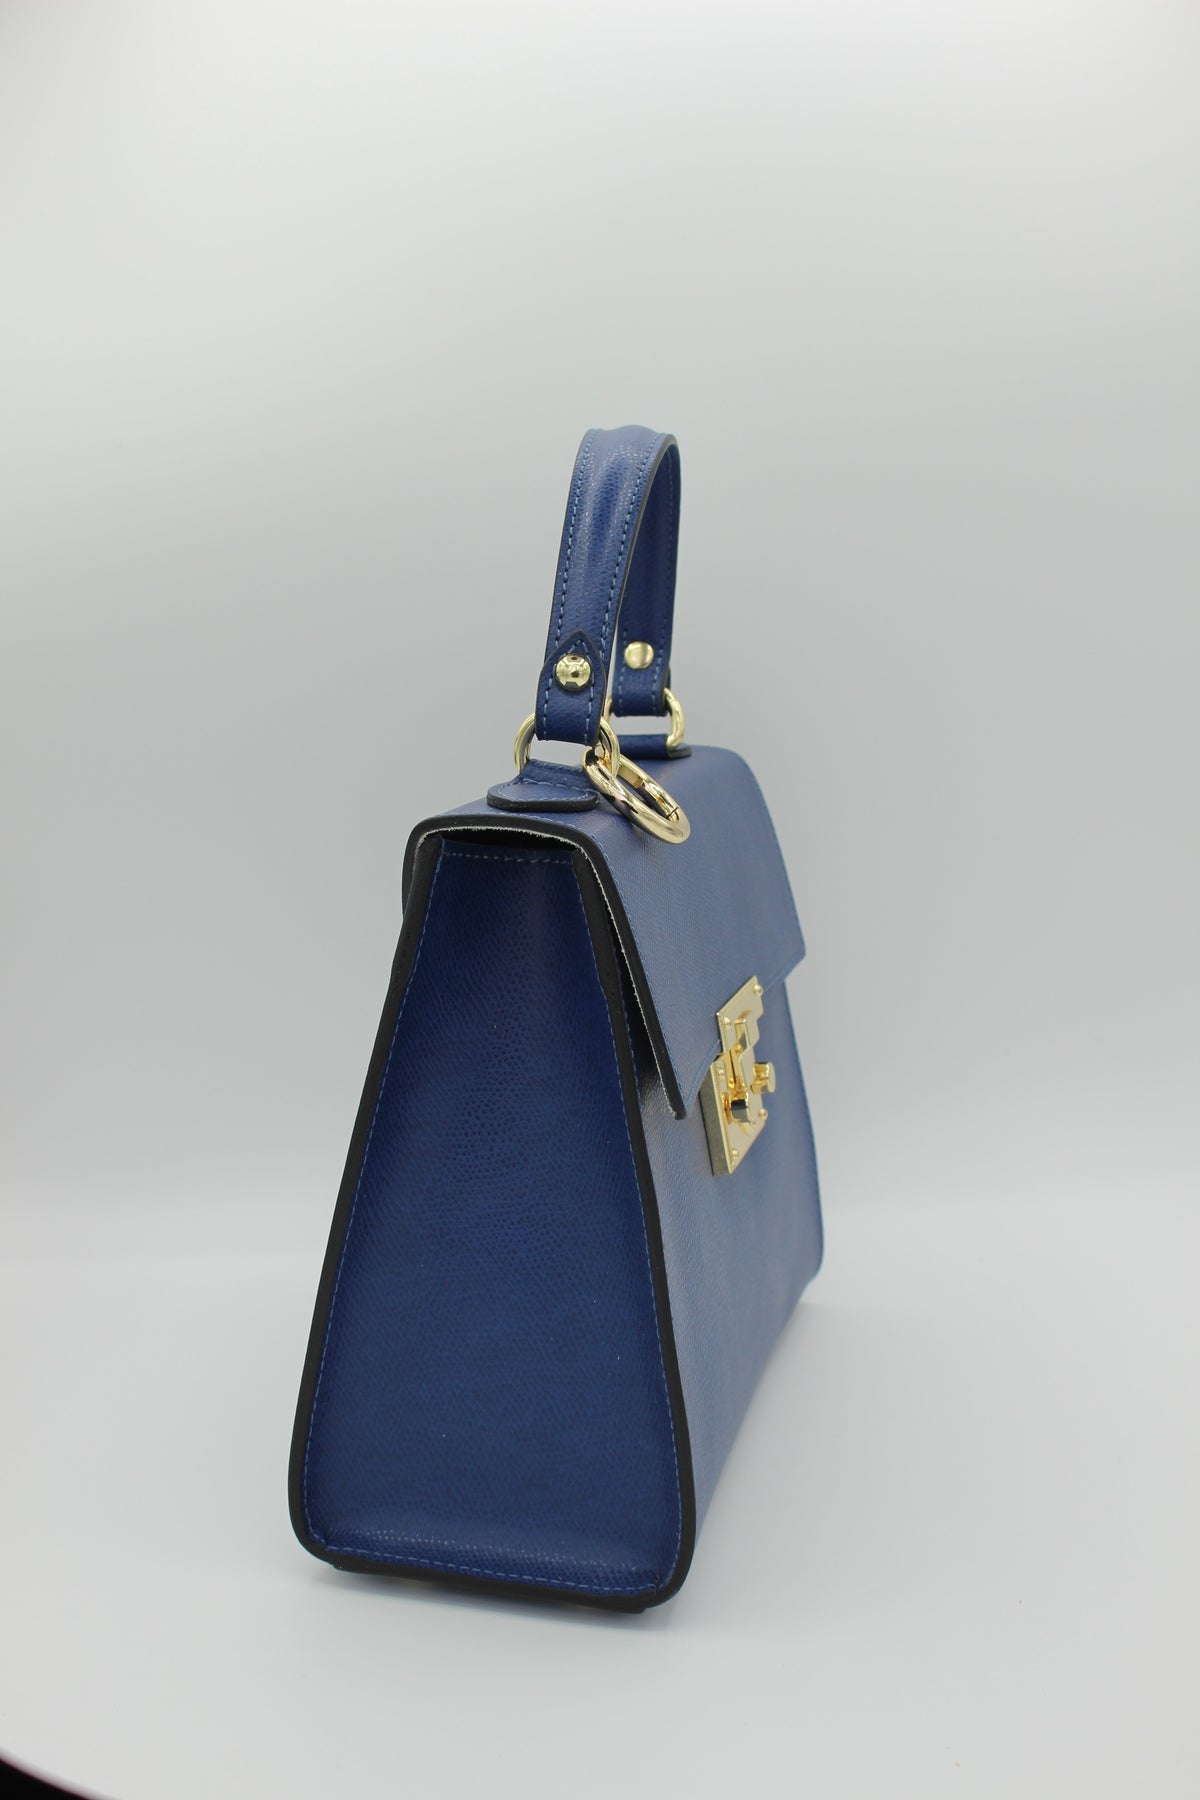 Blue Kelly Bovine Leather bag Side view